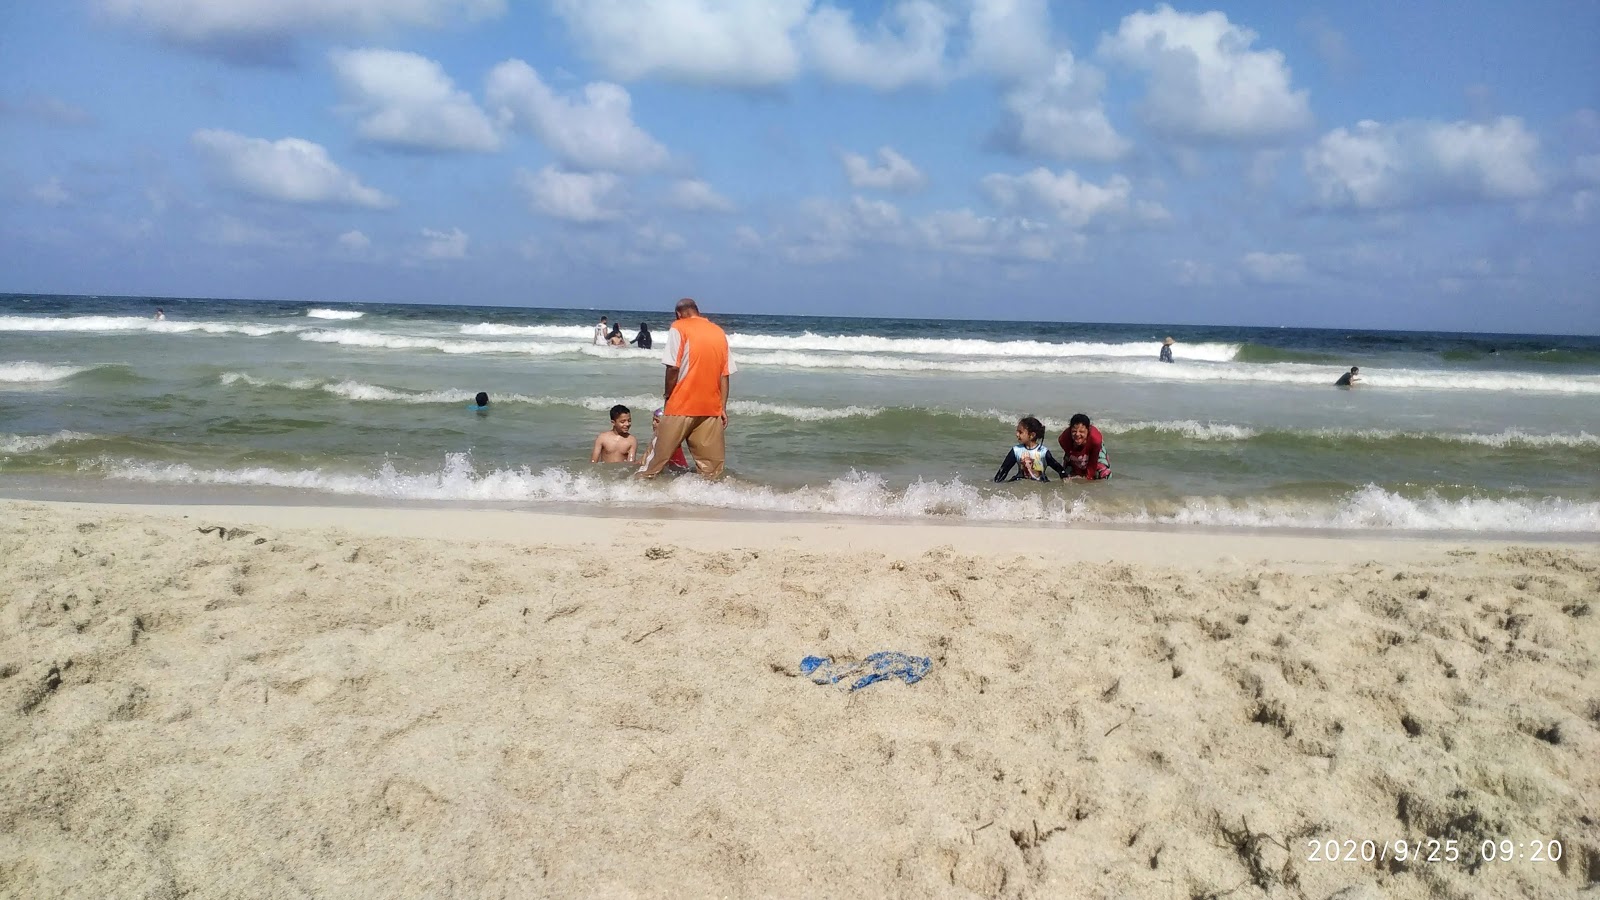 Fotografie cu Abu Yusif beach - locul popular printre cunoscătorii de relaxare